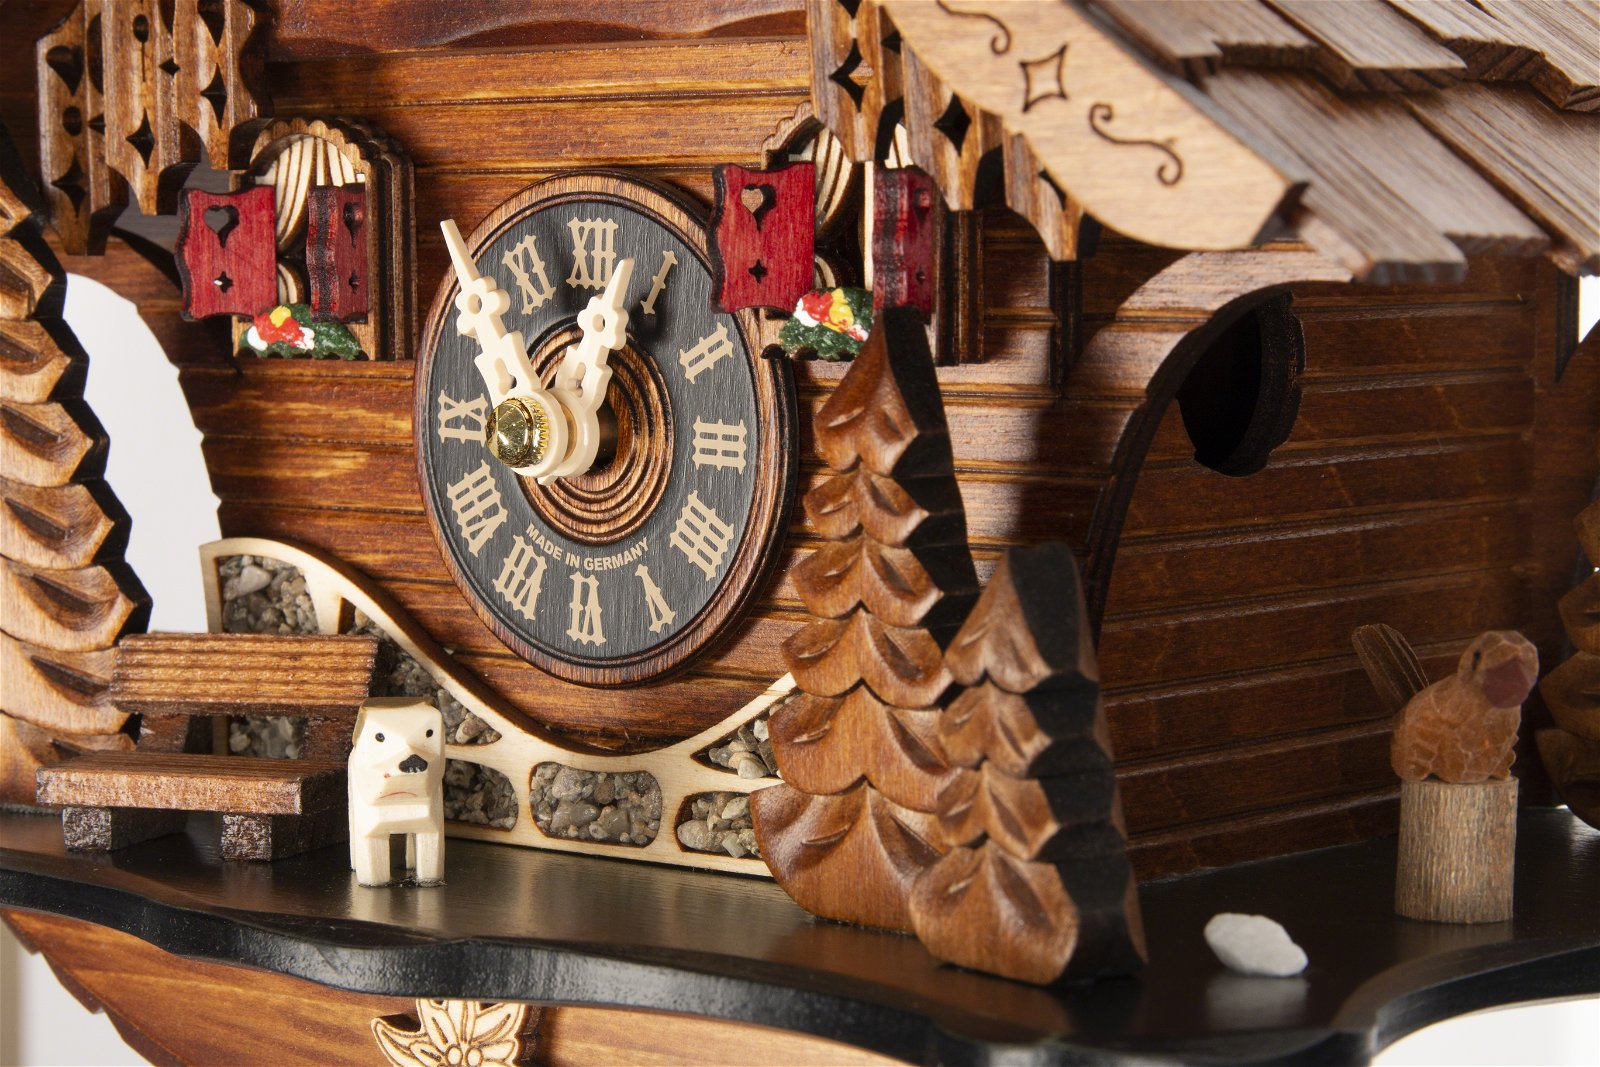 Cuckoo Clock Quartz-movement Chalet-Style 25cm by Engstler